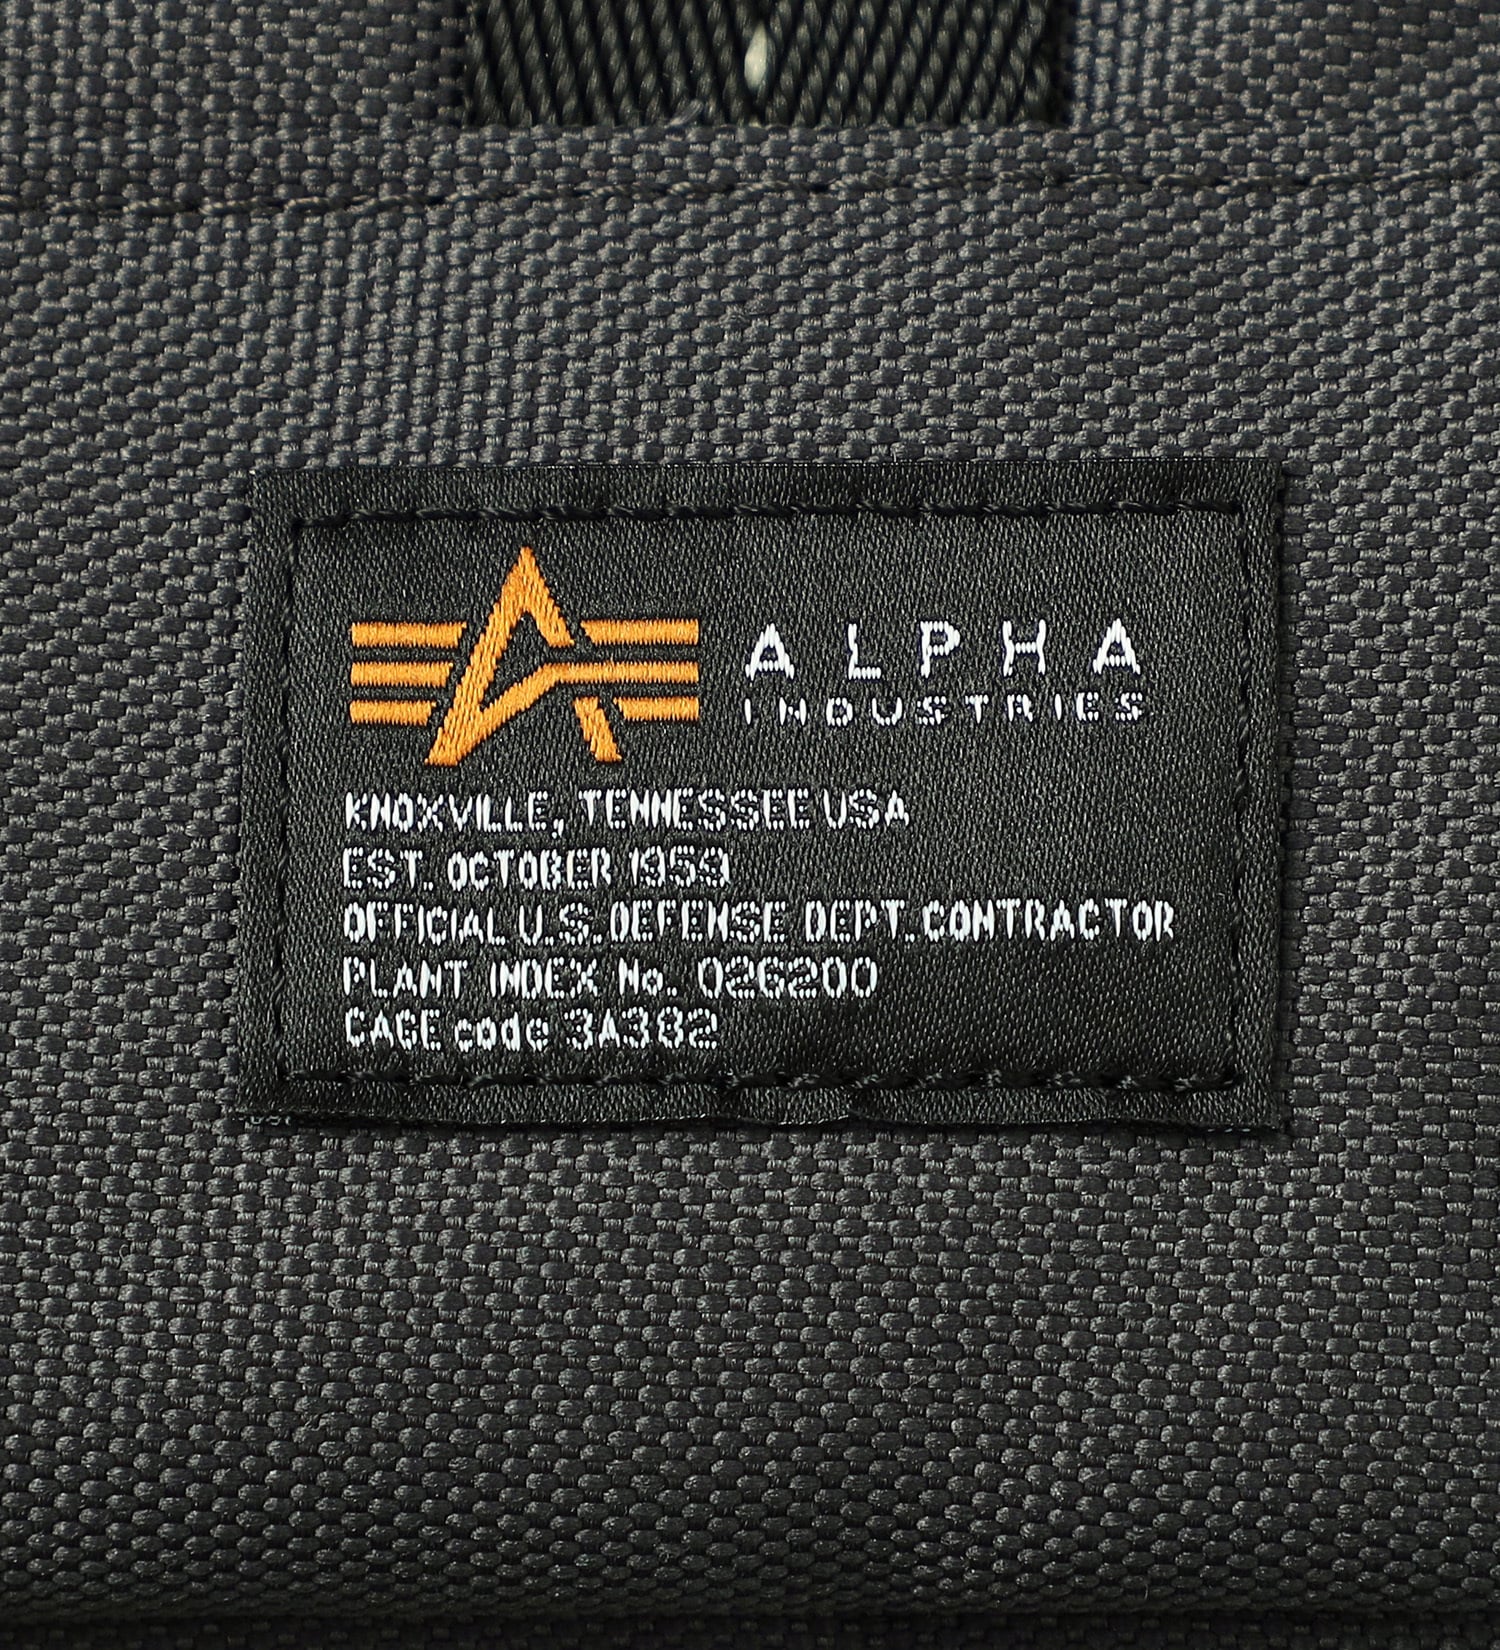 ALPHA(アルファ)のポリエステルコーデュラ ツールトートバッグL|バッグ/トートバッグ/メンズ|グレー系その他